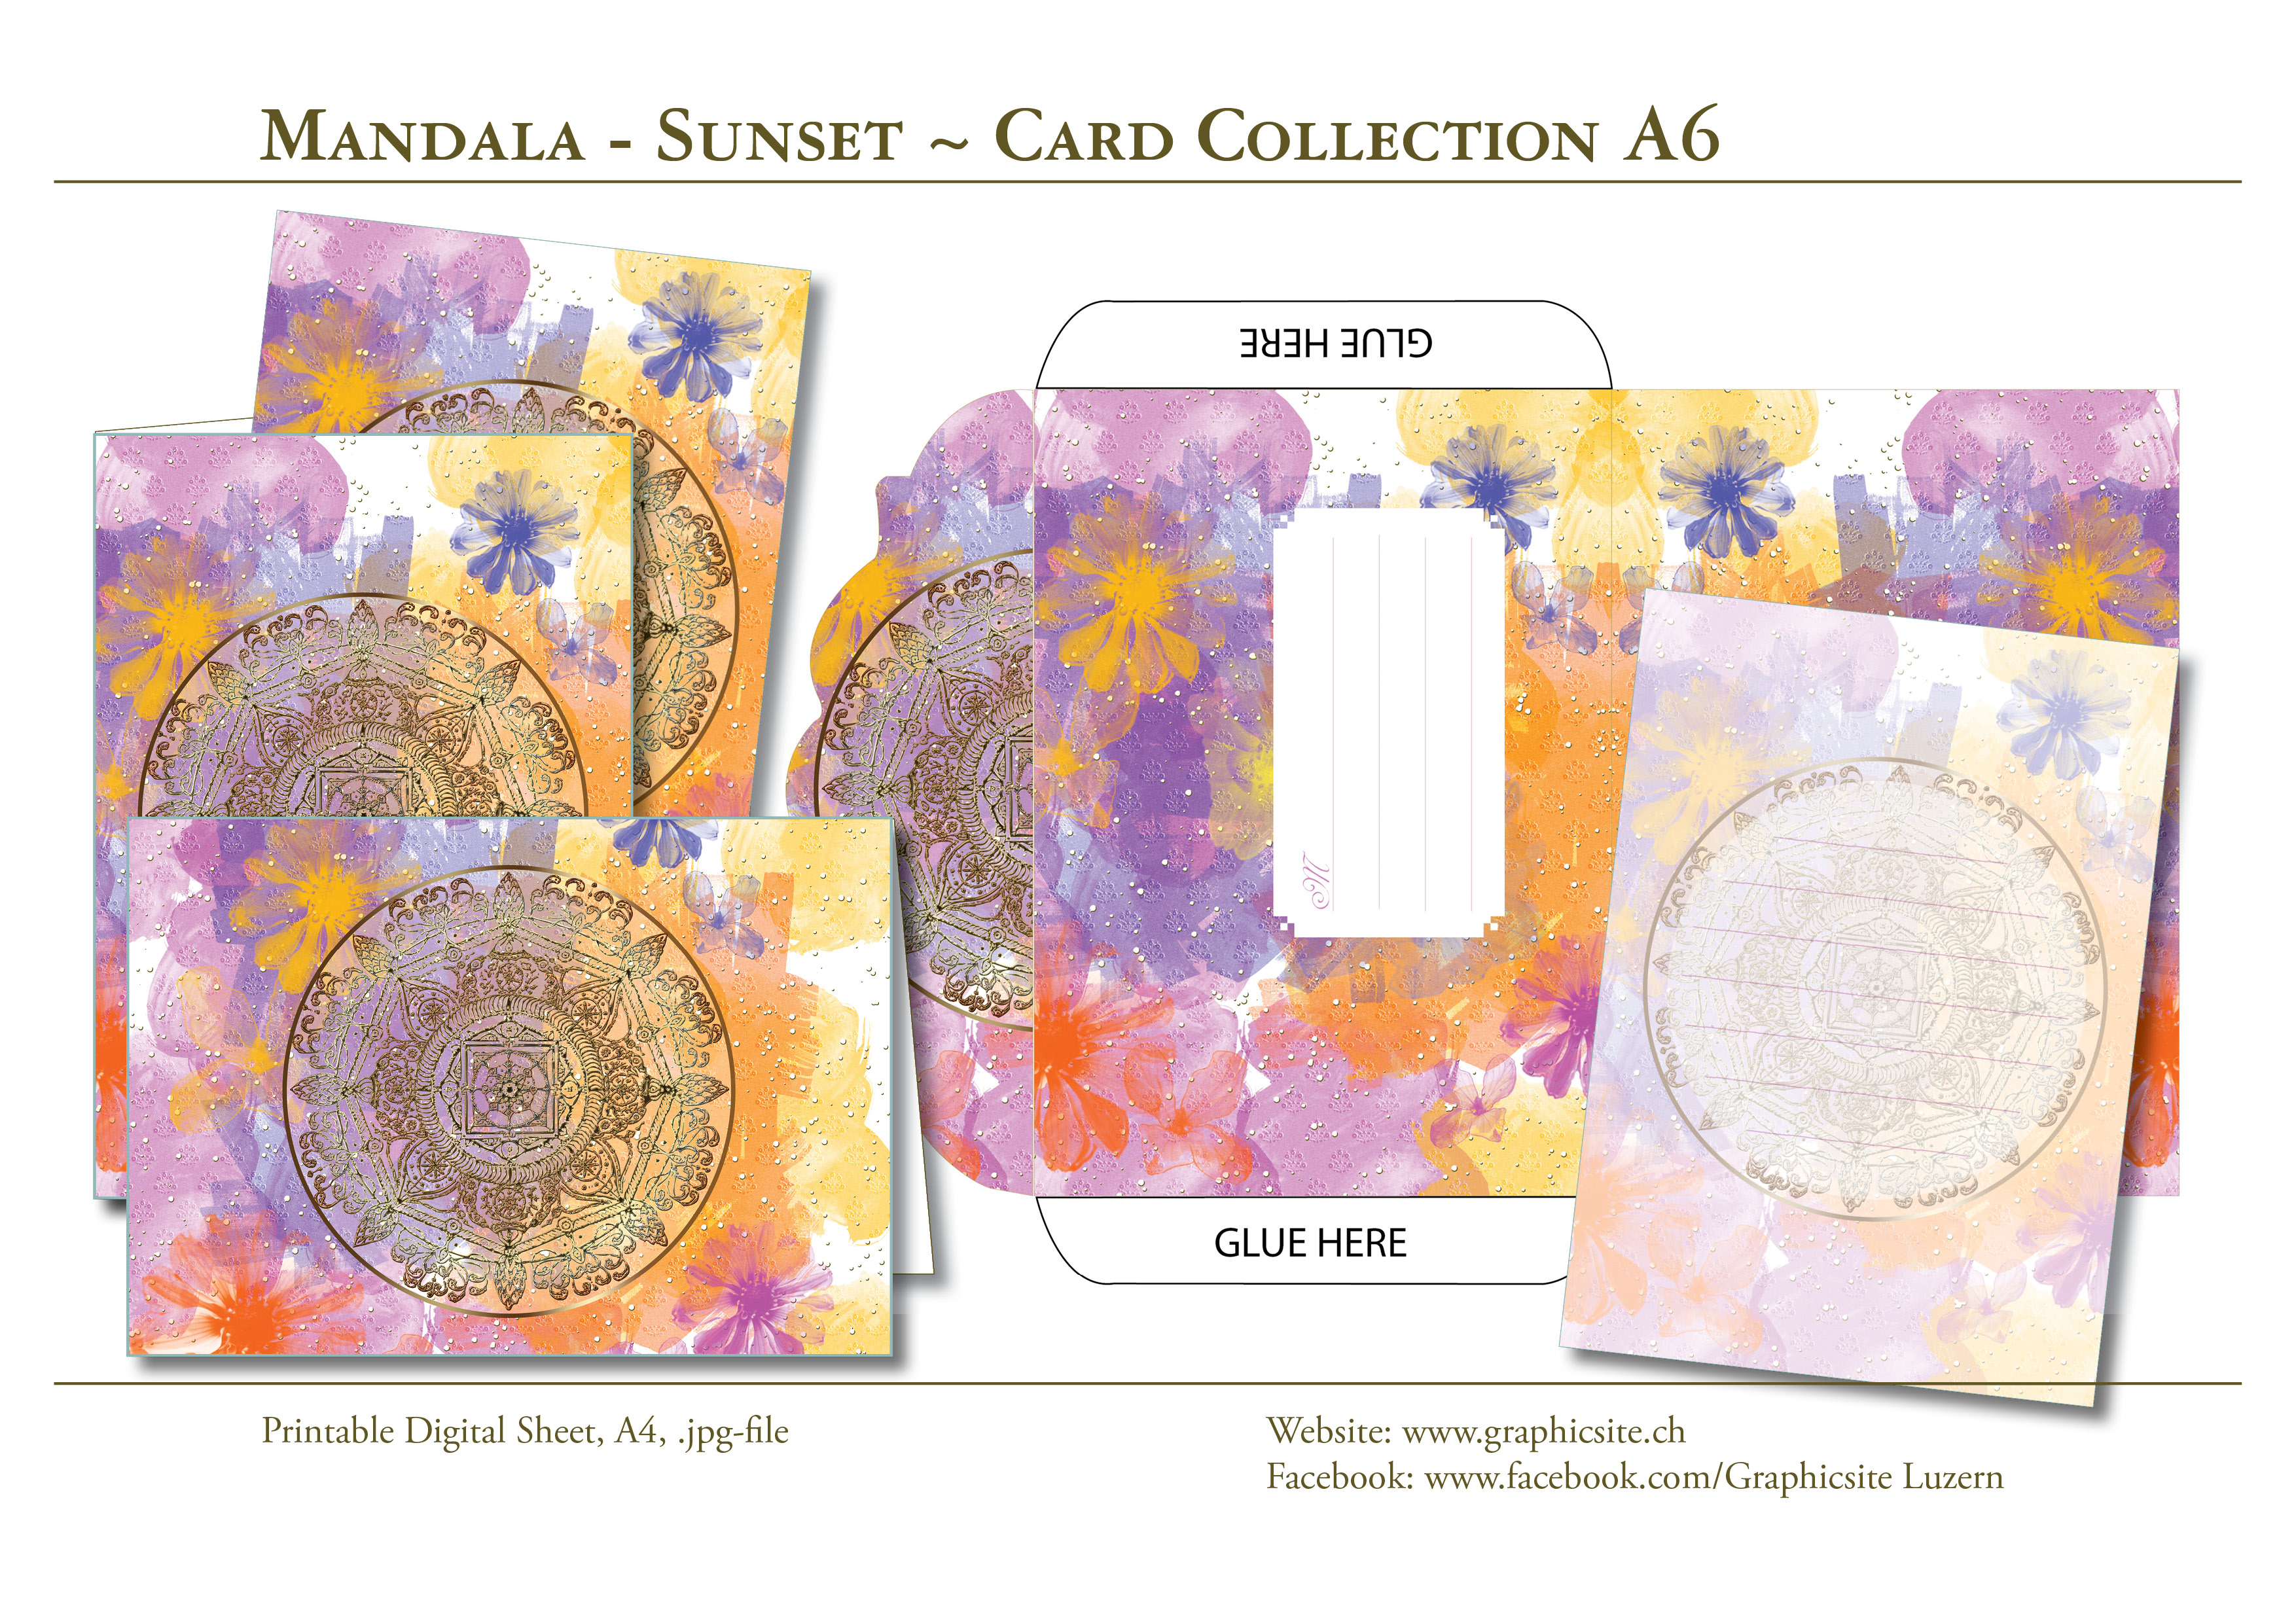 Printable Digital Sheets - DIN A-Formats - MANDALA Sunset - Greeting Cards, Yoga, Meditation, Watercolor, purple, orange, Graphic Design, Luzern, Graphics